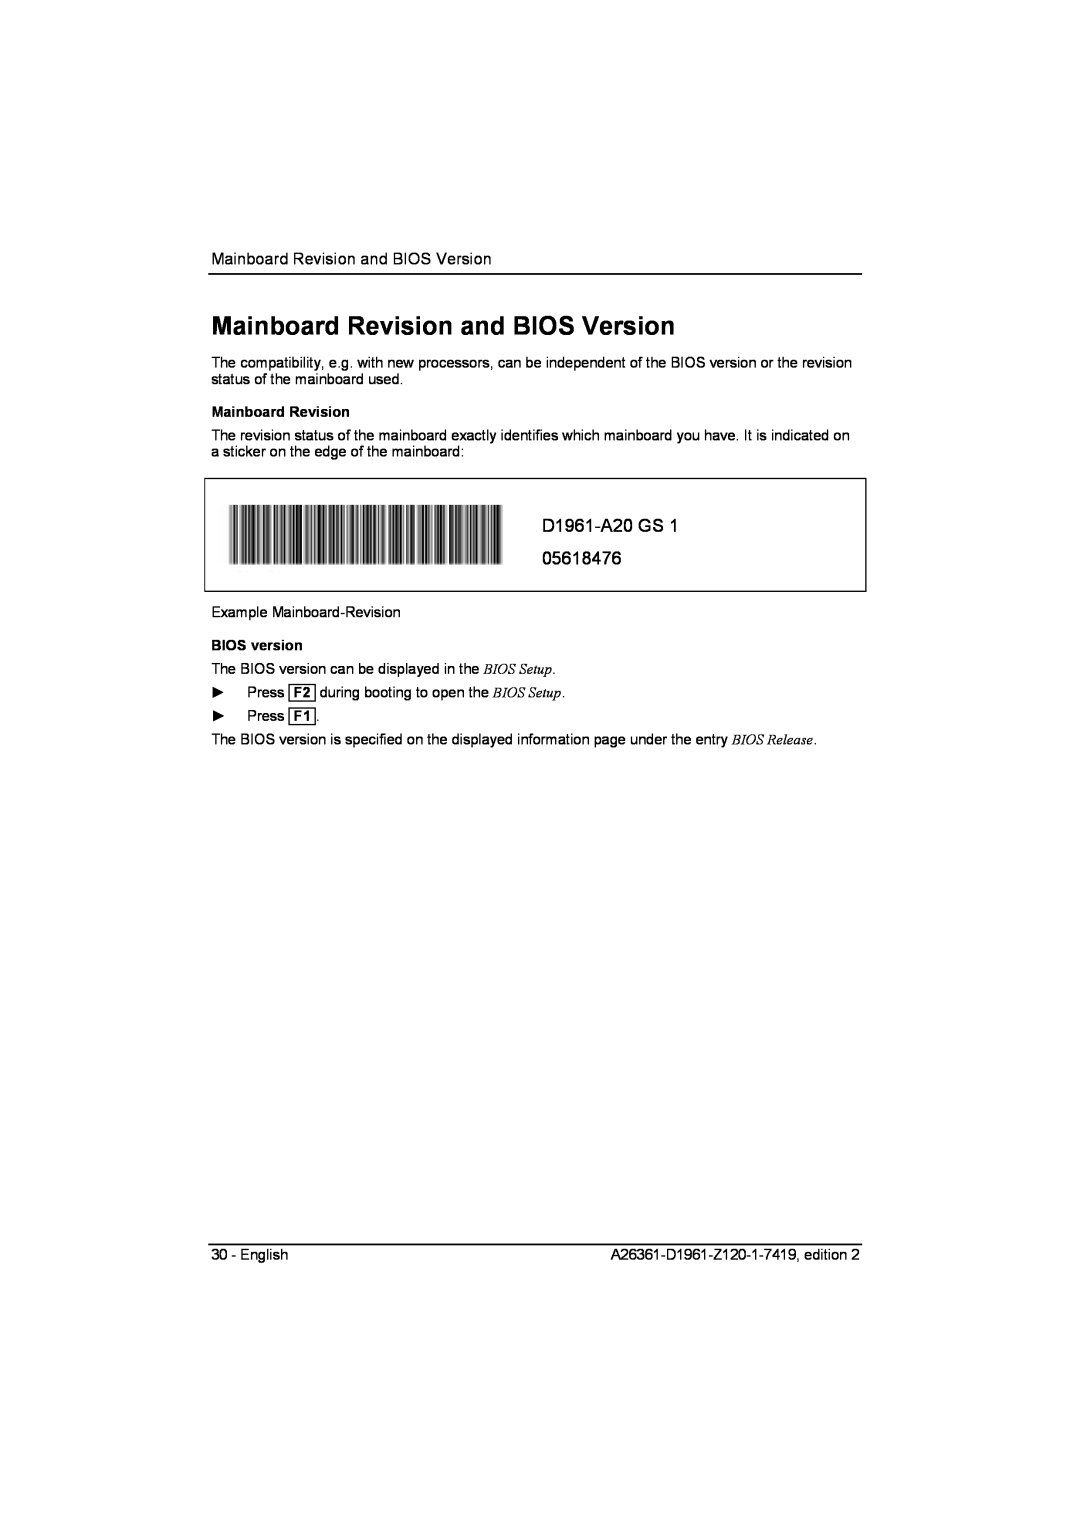 Fujitsu technical manual Mainboard Revision and BIOS Version, D1961-A20 GS 05618476, BIOS version 